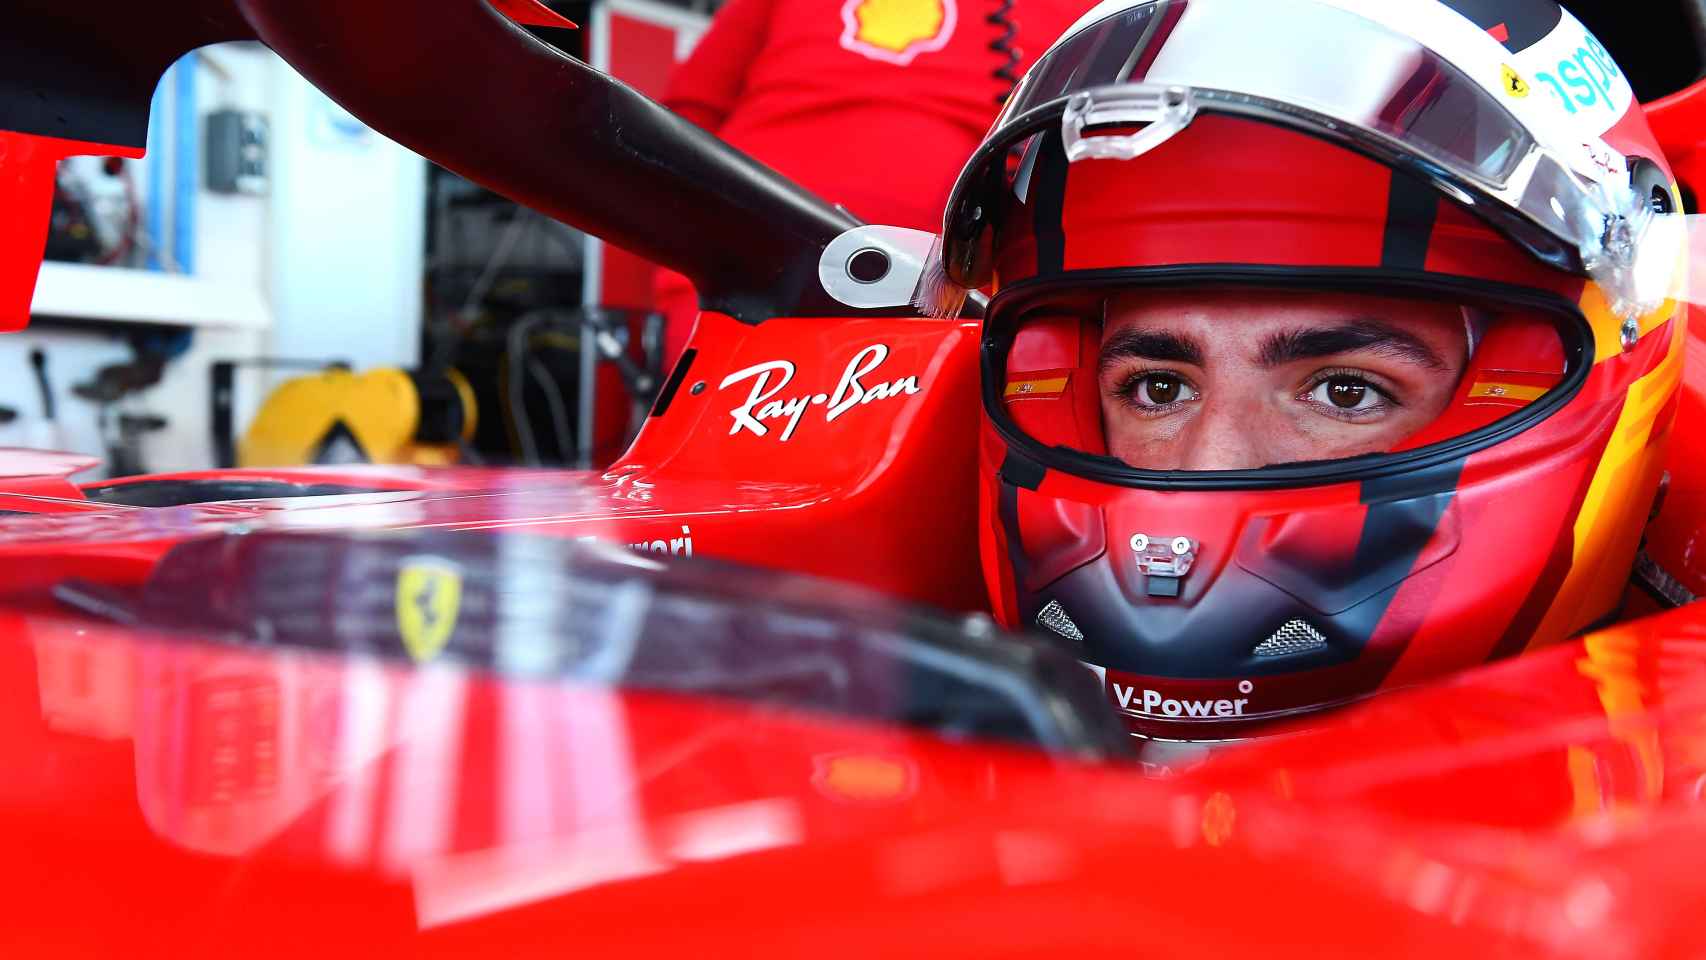 Carlos Sainz, en el 'cockpit' del Ferrari de 2020